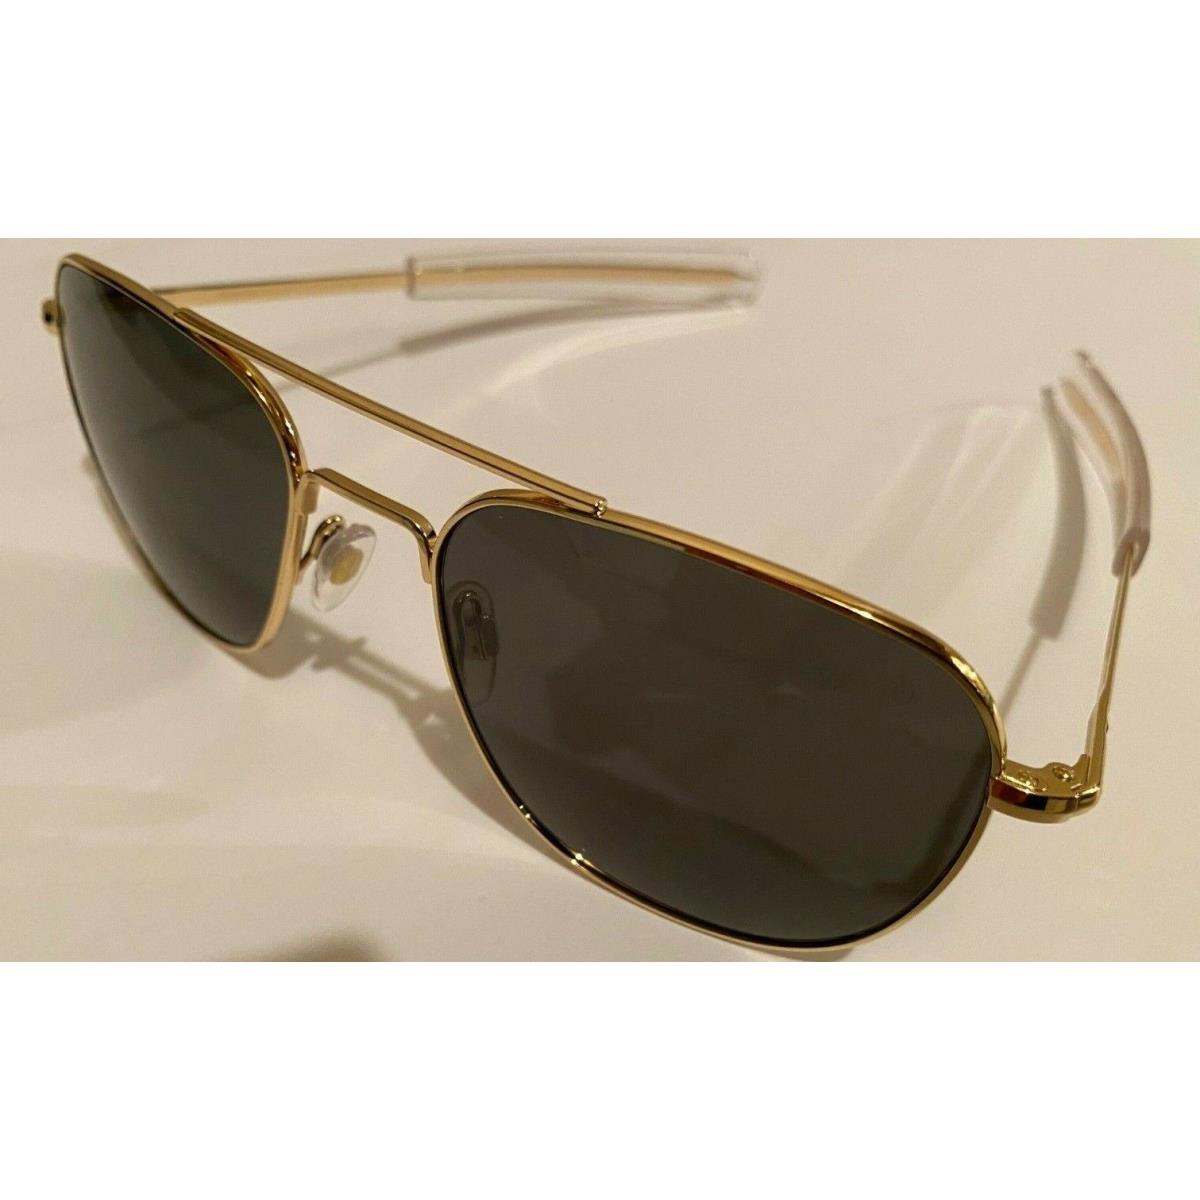 55mm Gold Frames American Optical AO Pilot Sunglasses